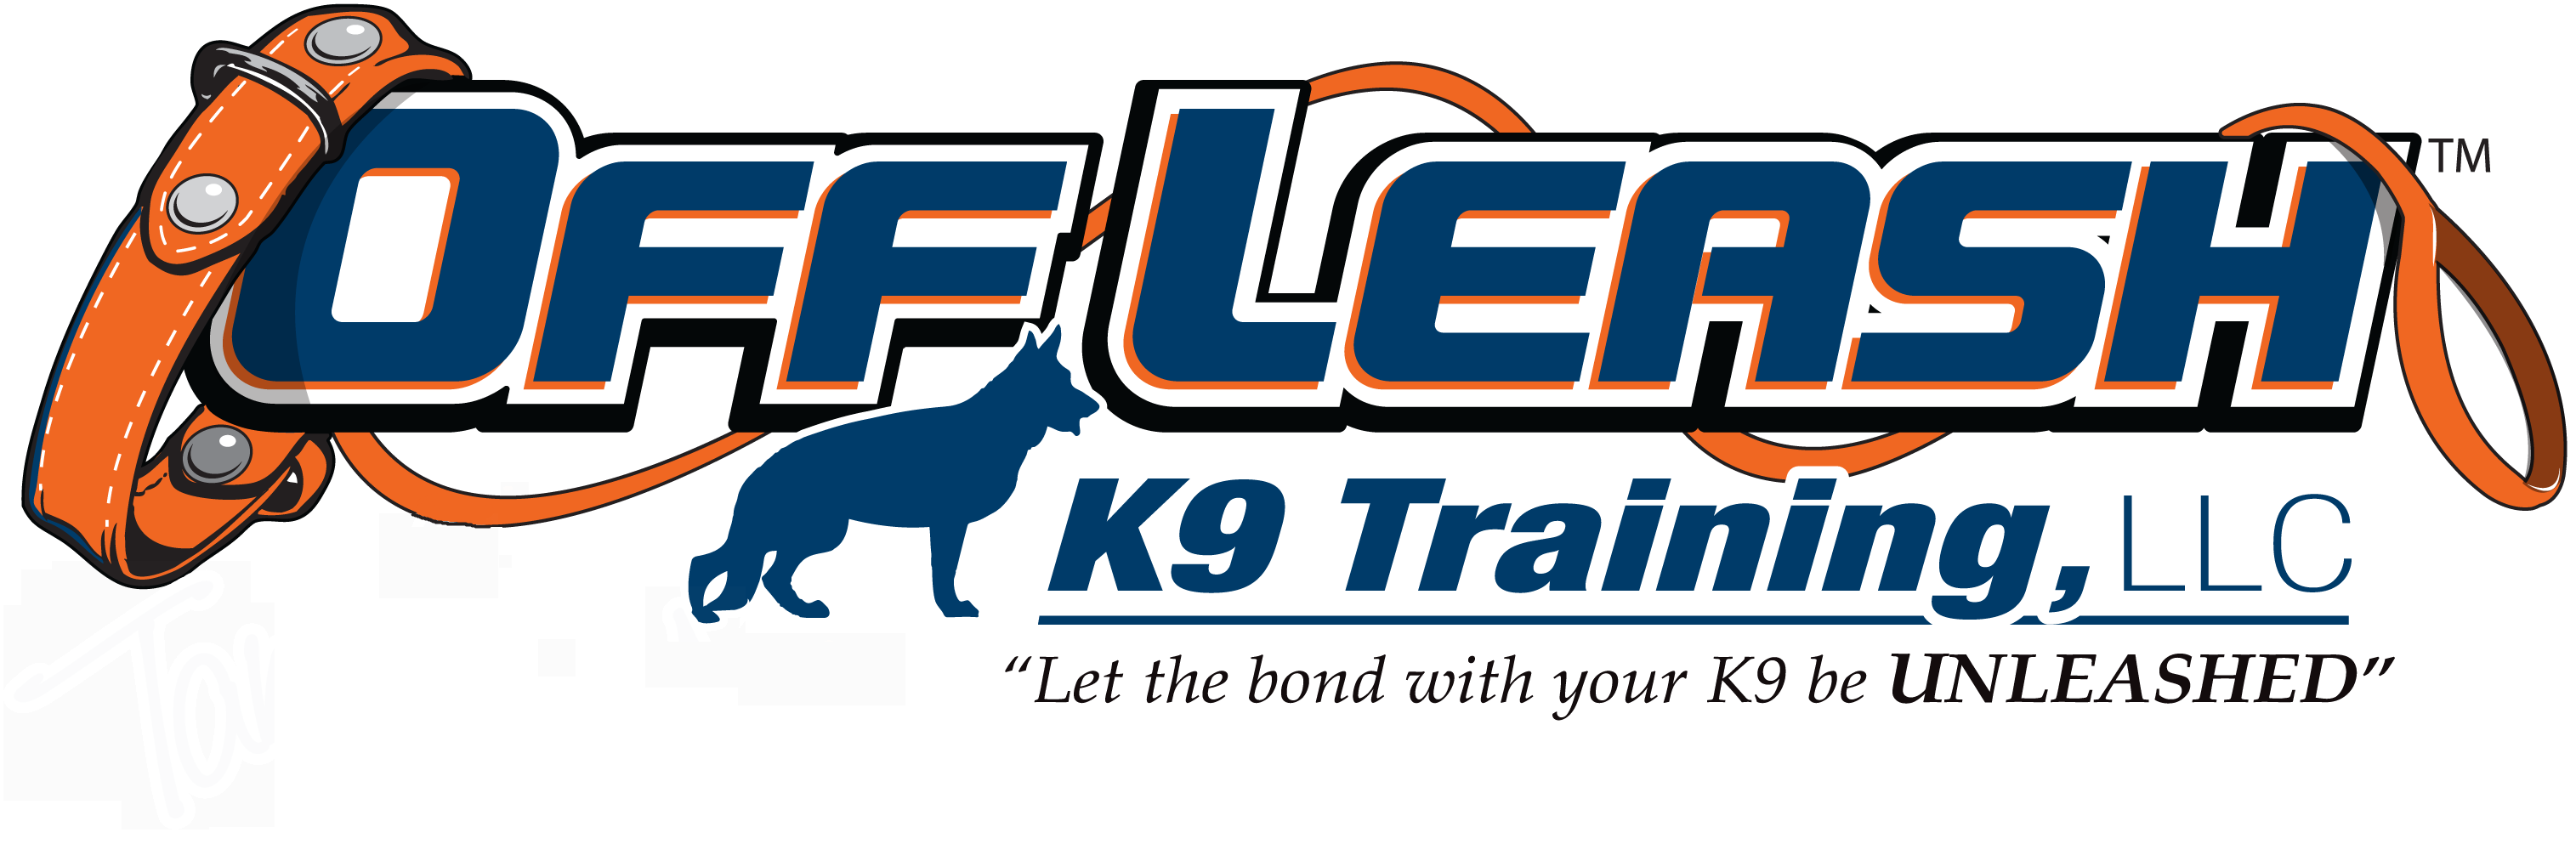 New Hampshire Offleash K9 Dog Training